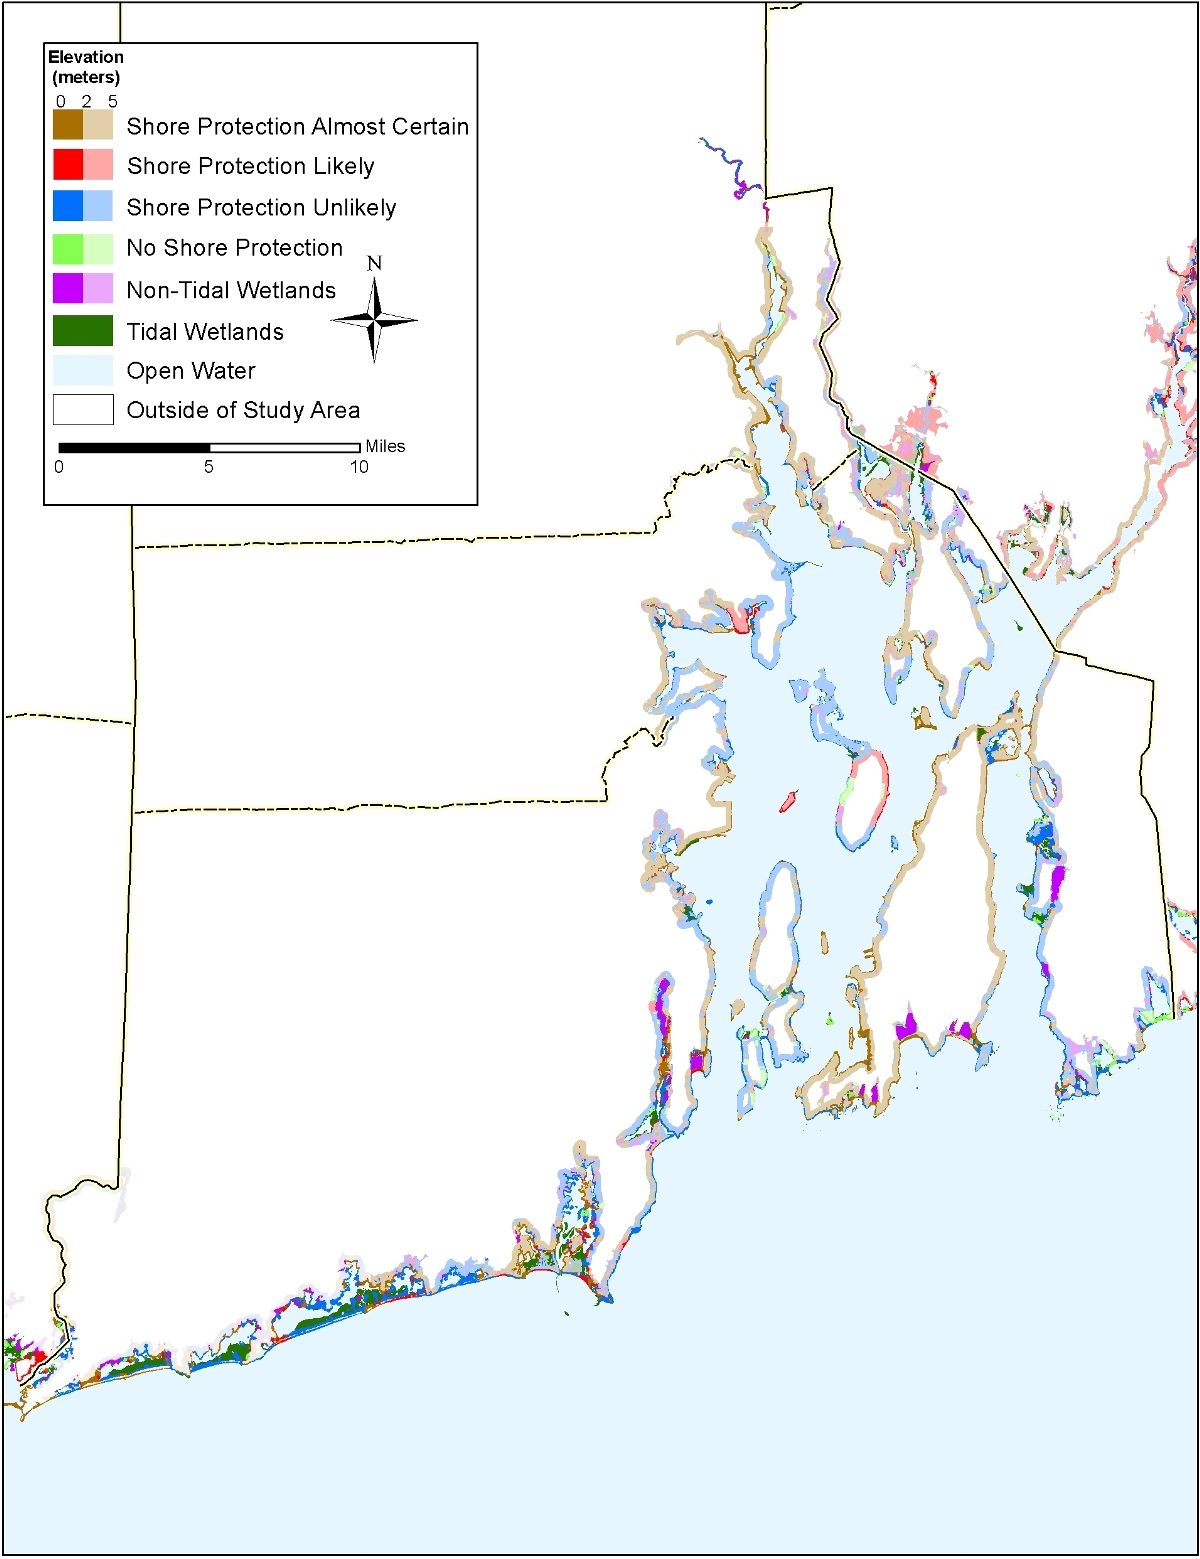  Rhode Island sea level rise planning map